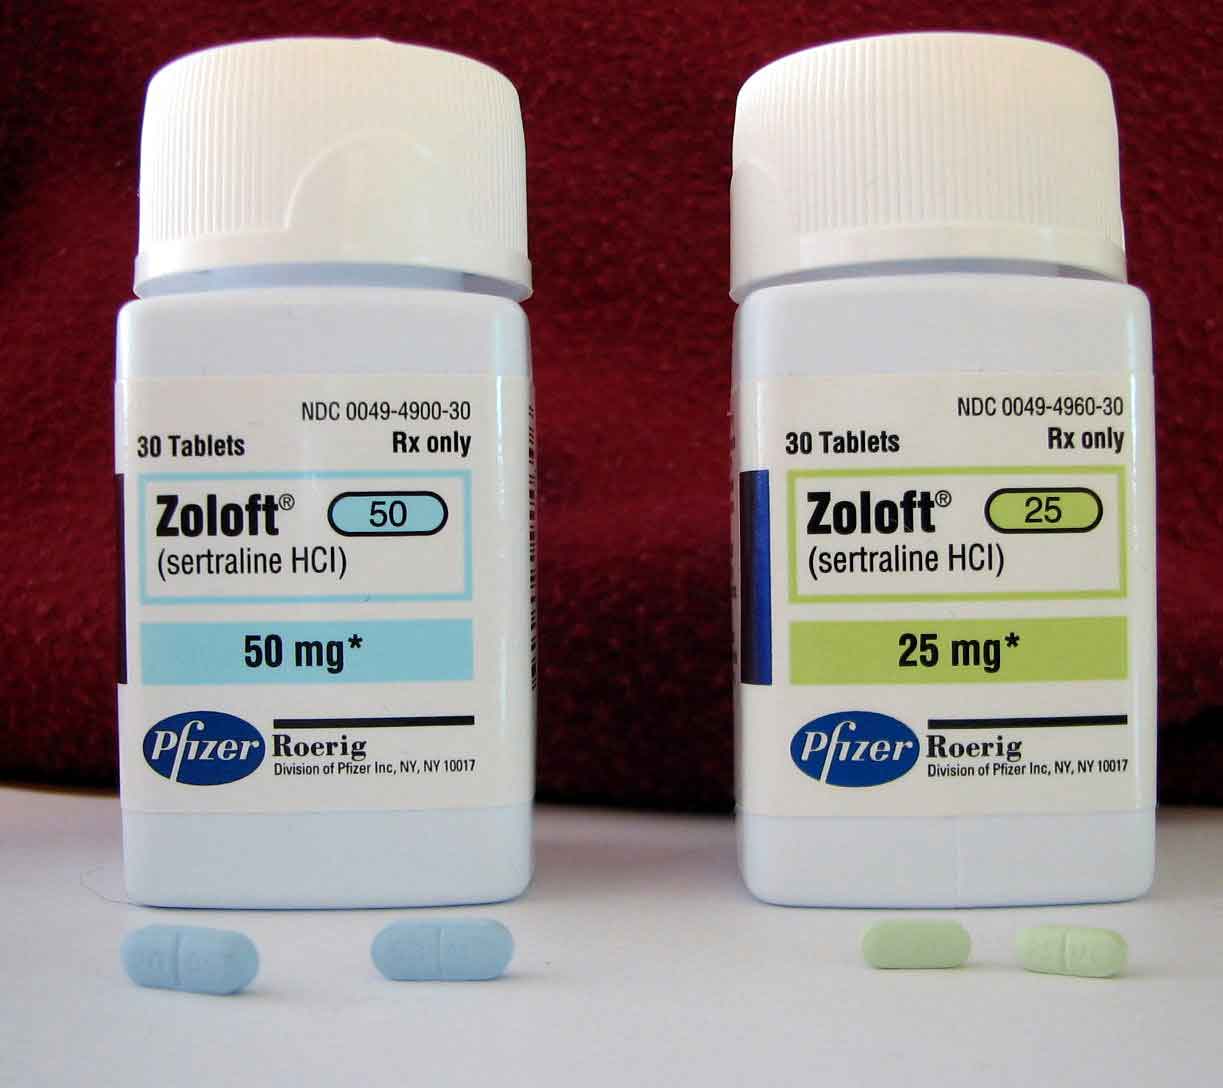 Zoloft Lawsuit Trial – MDL Bellwether Hearing Delayed